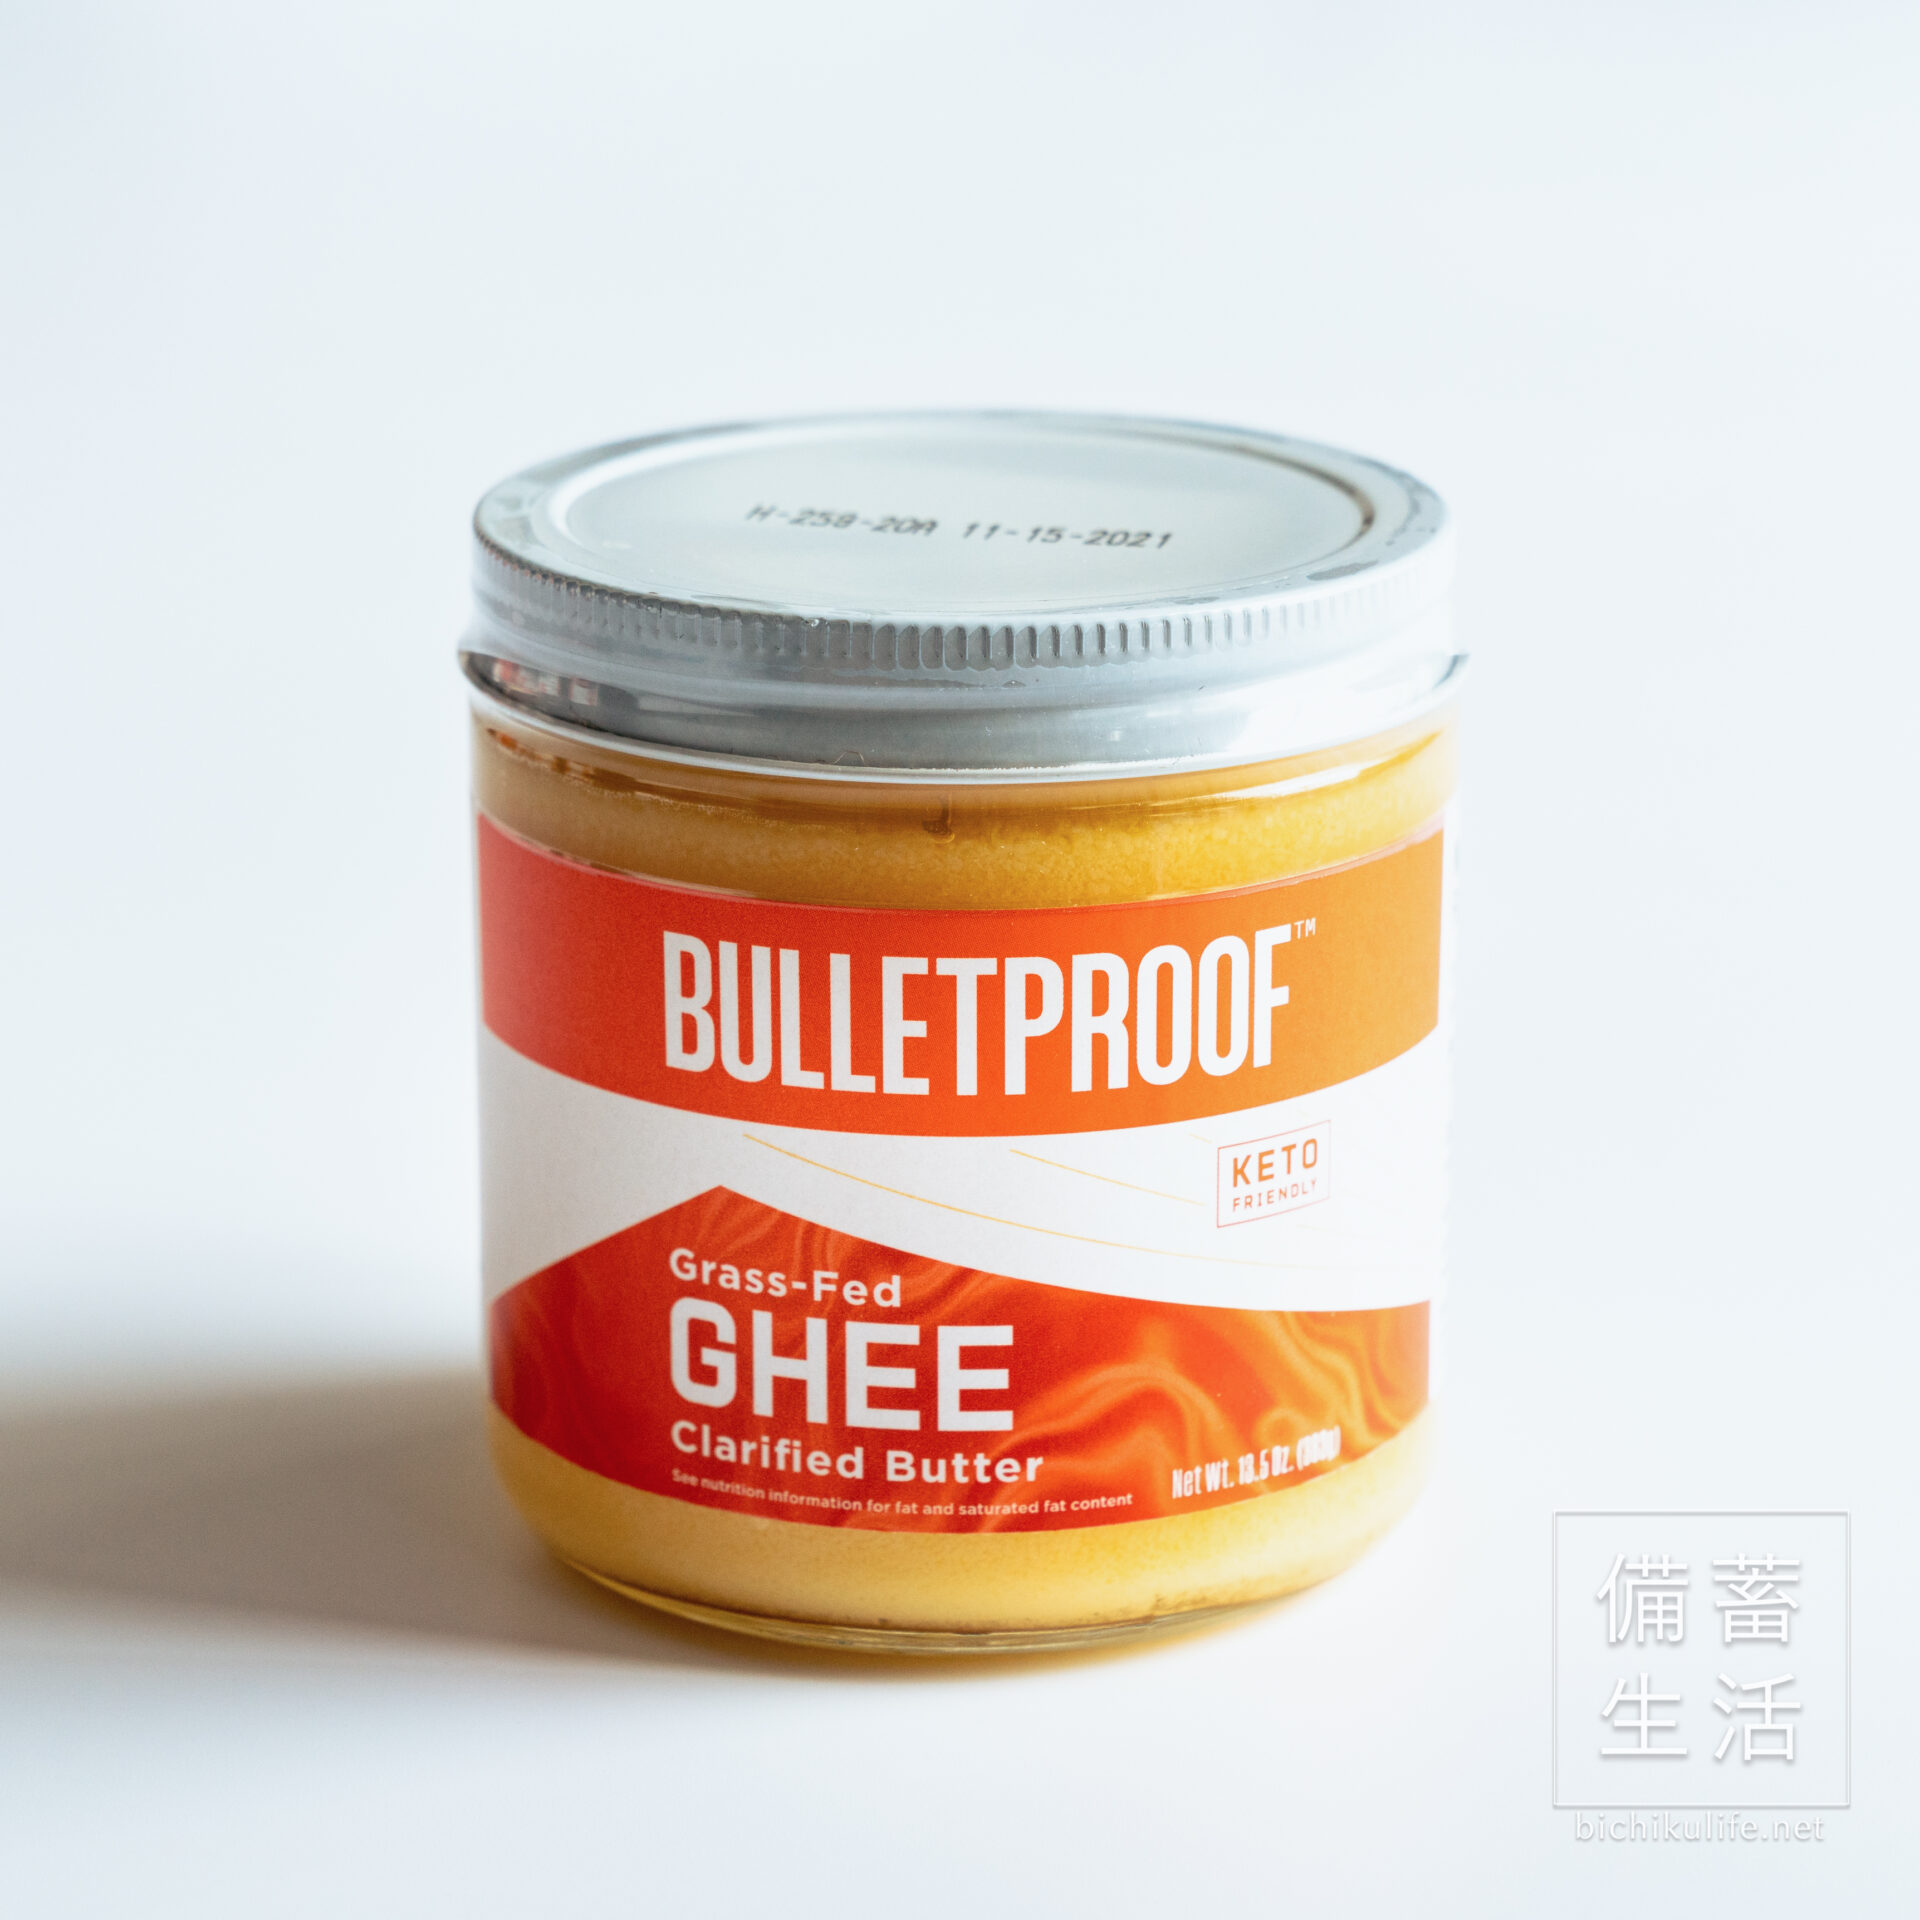 Bulletproofのグラスフェッドギー Grasss-fed Ghee（澄ましバター）